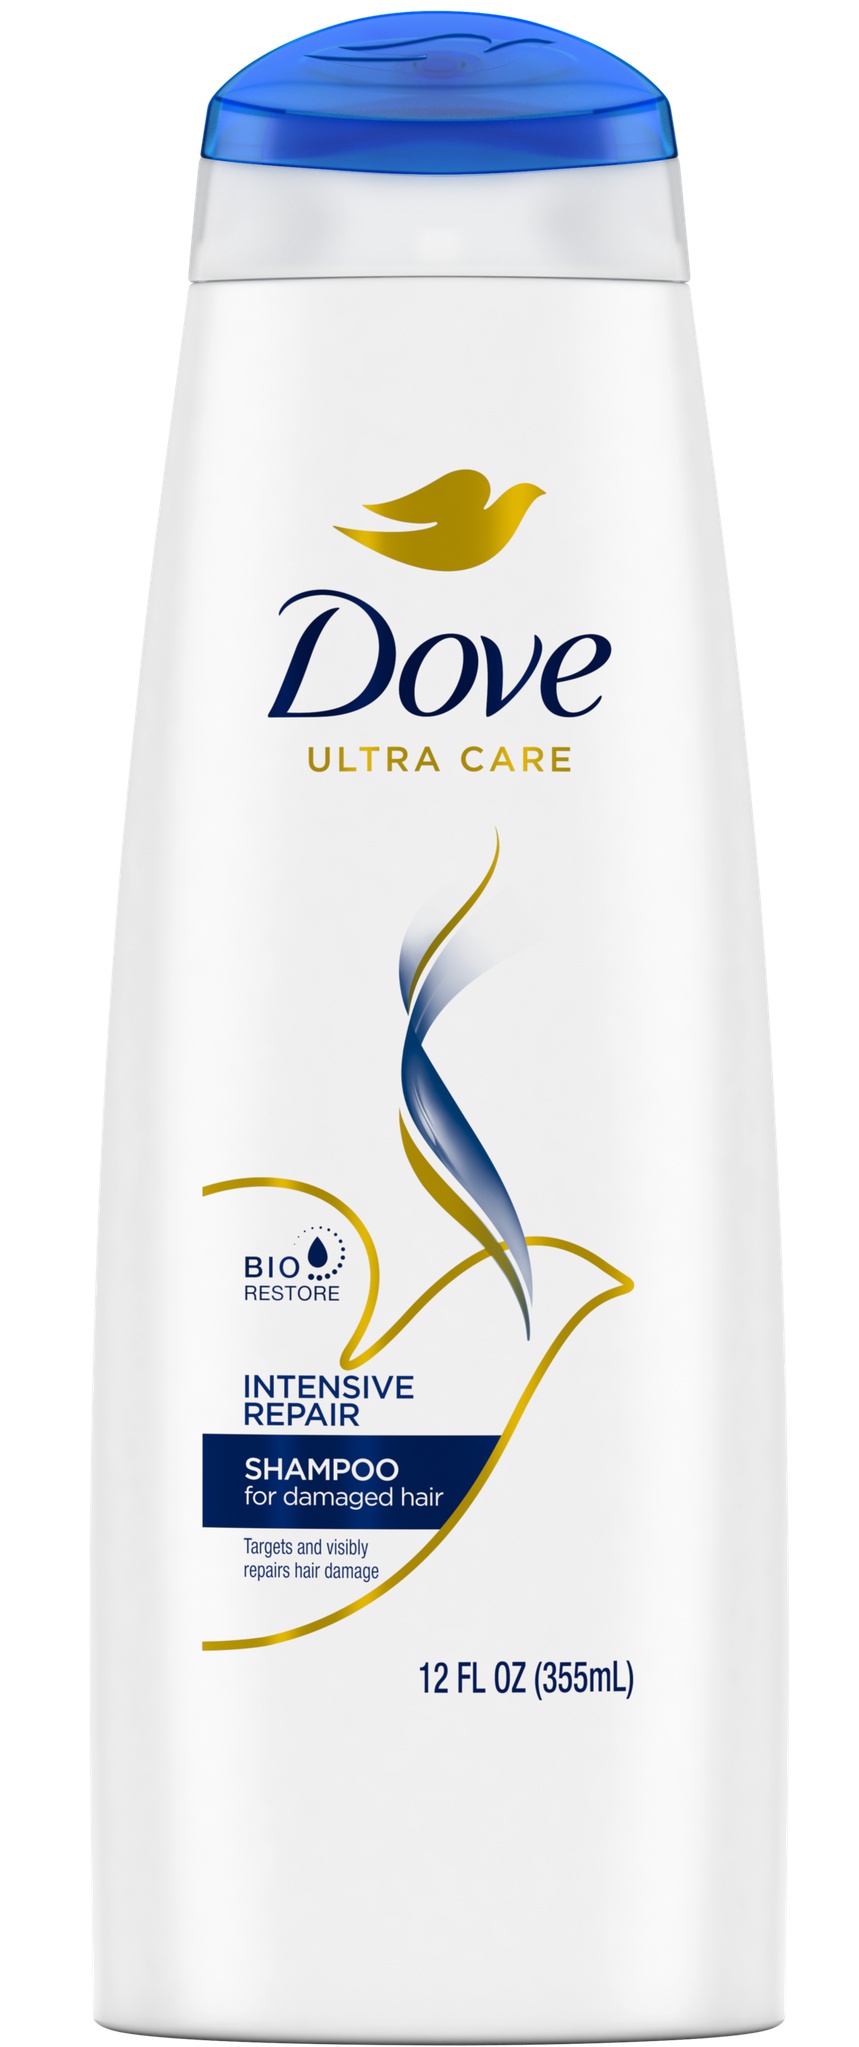 Dove Ultra Care Intensive Repair Daily Shampoo